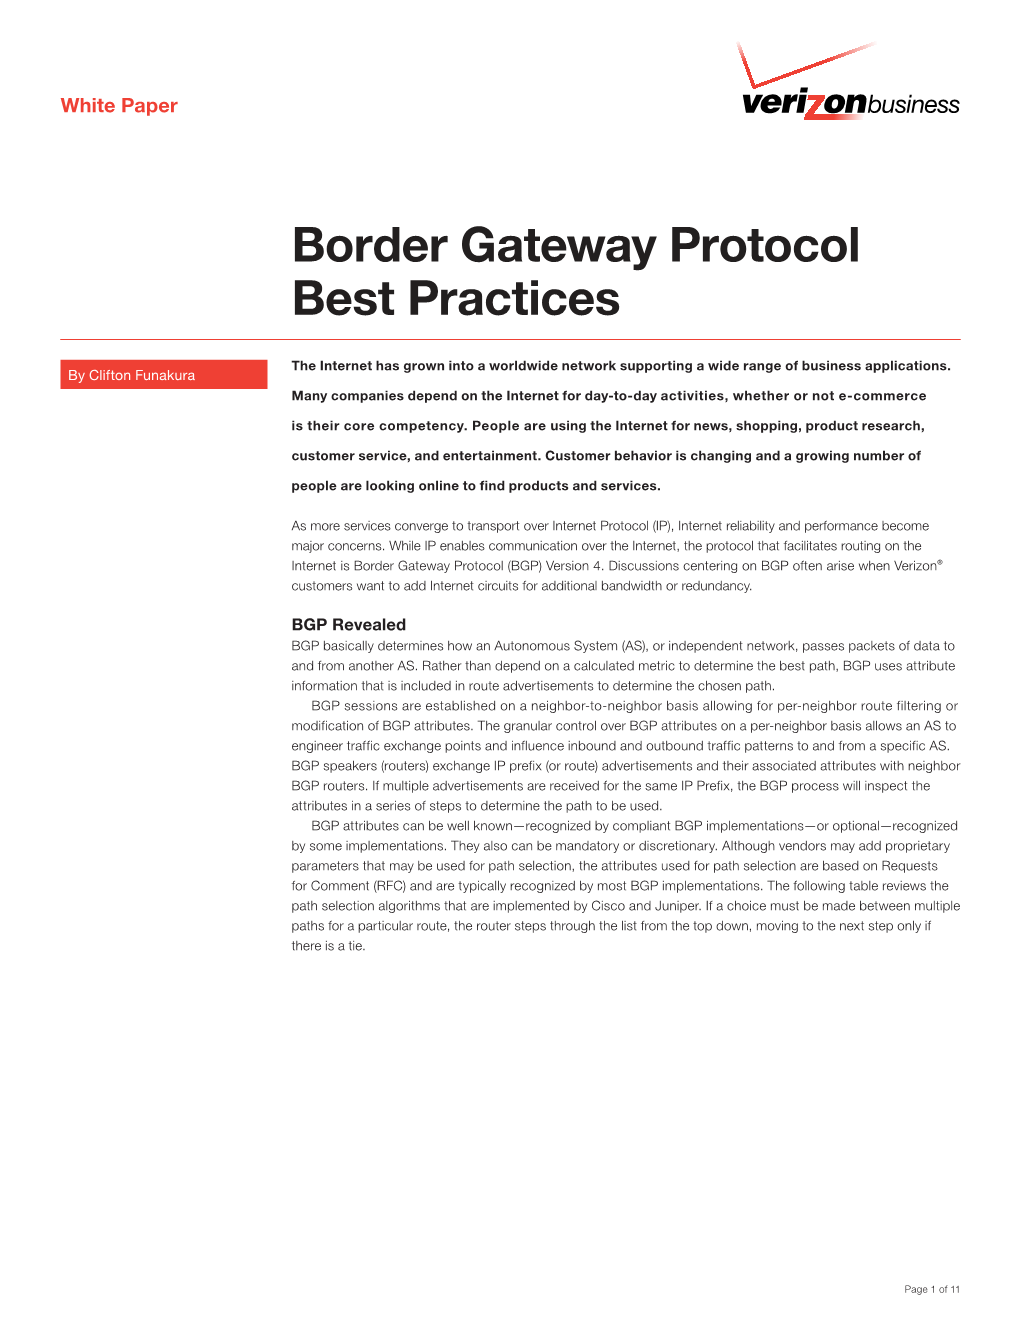 Border Gateway Protocol Best Practices